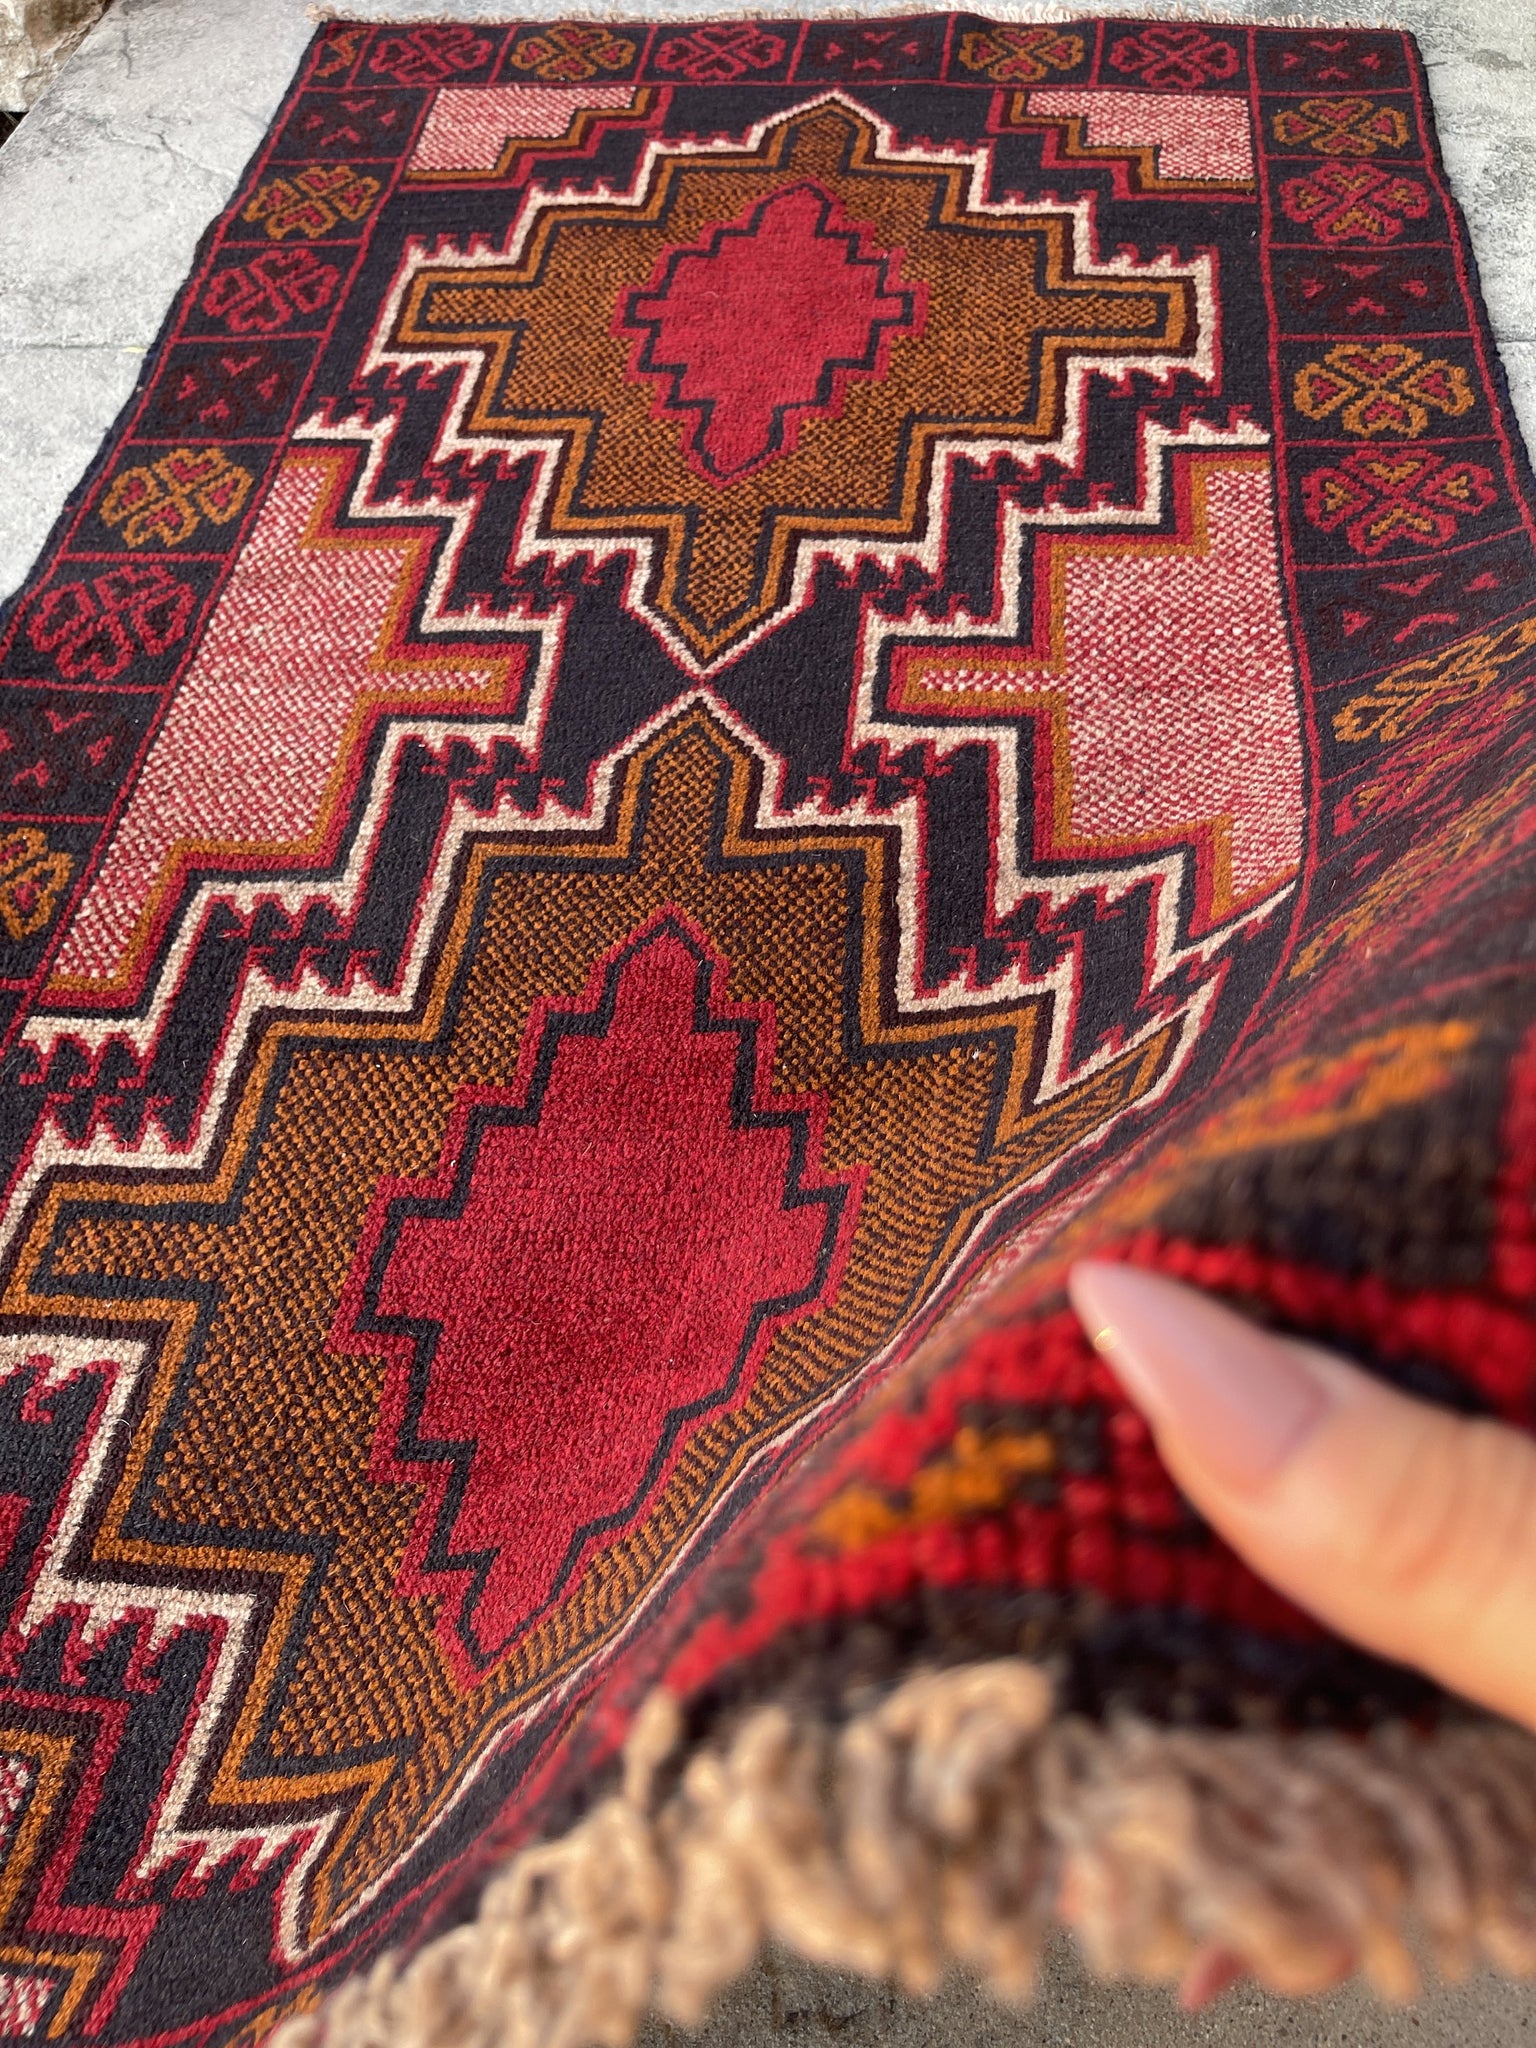 3x5 (90x150) Handmade Vintage Afghan Rug | Red Black Orange | Nomadic Baluch Boho Bohemian Tribal Turkish Moroccan Wool